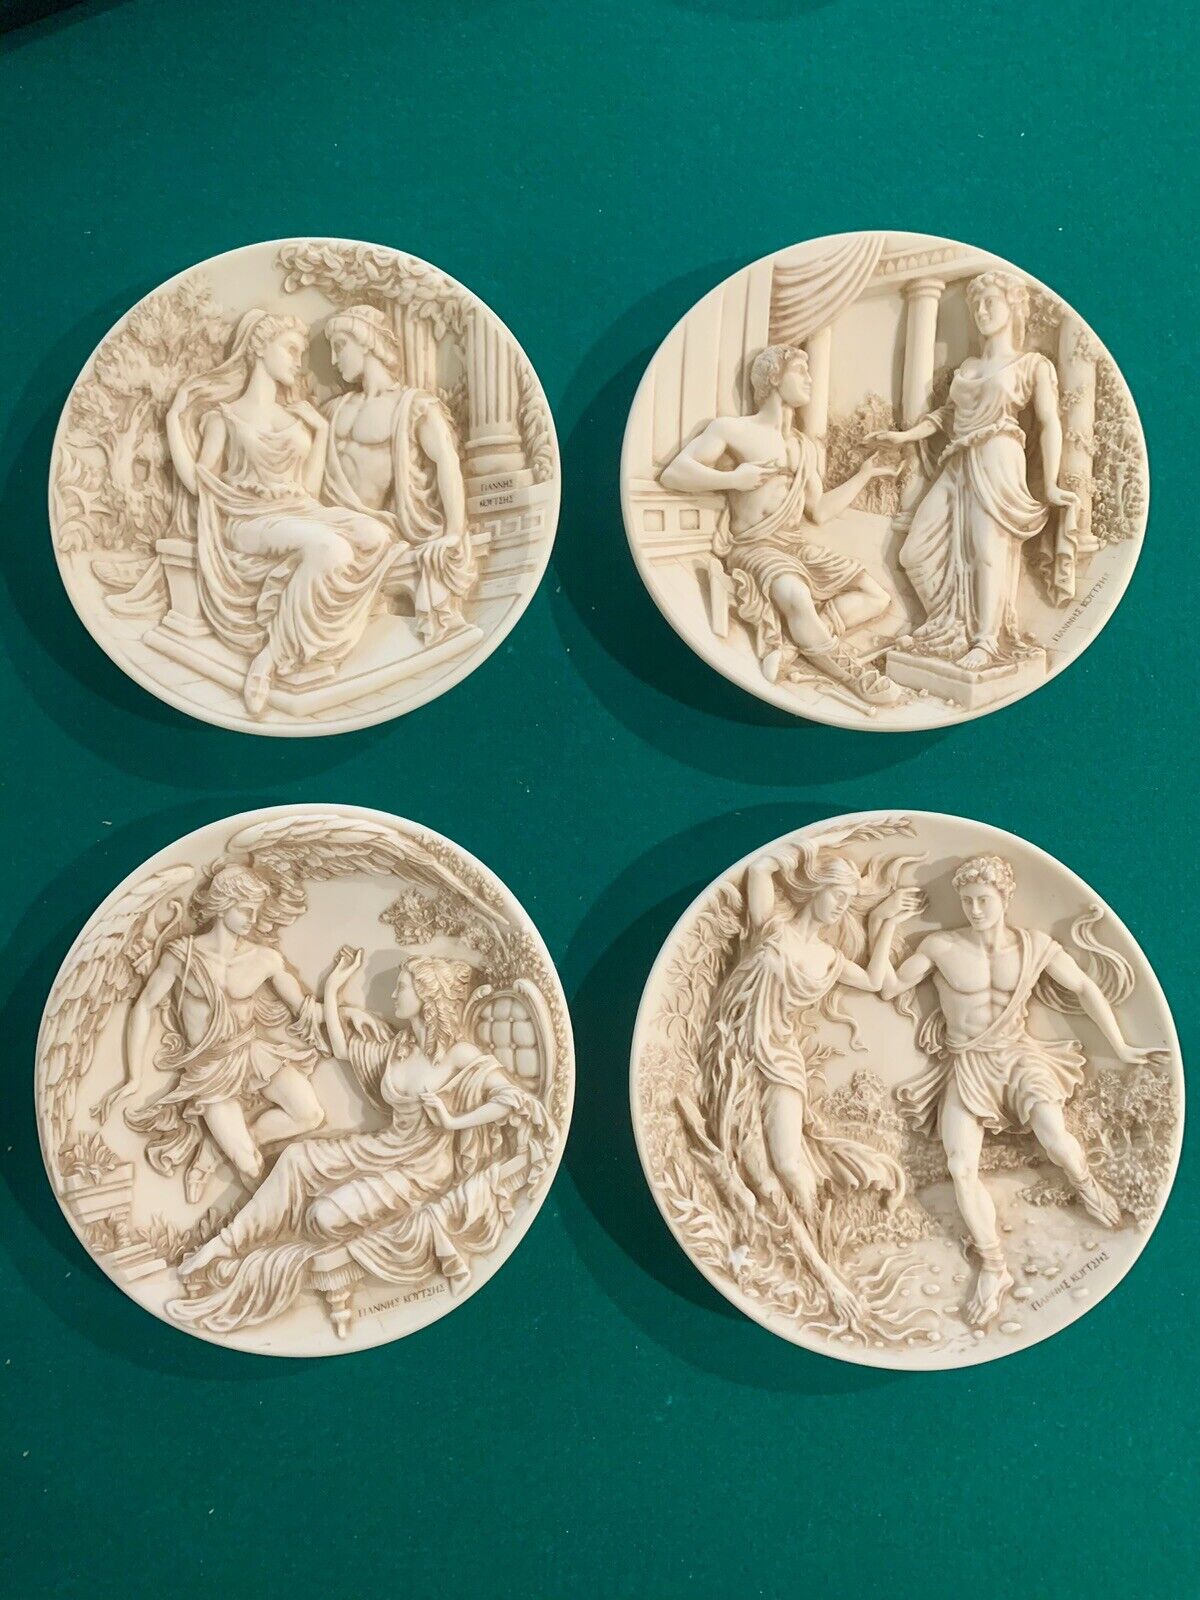 Vintage Great Love Stories Greek Mythology Marble Collector Plates set of 4